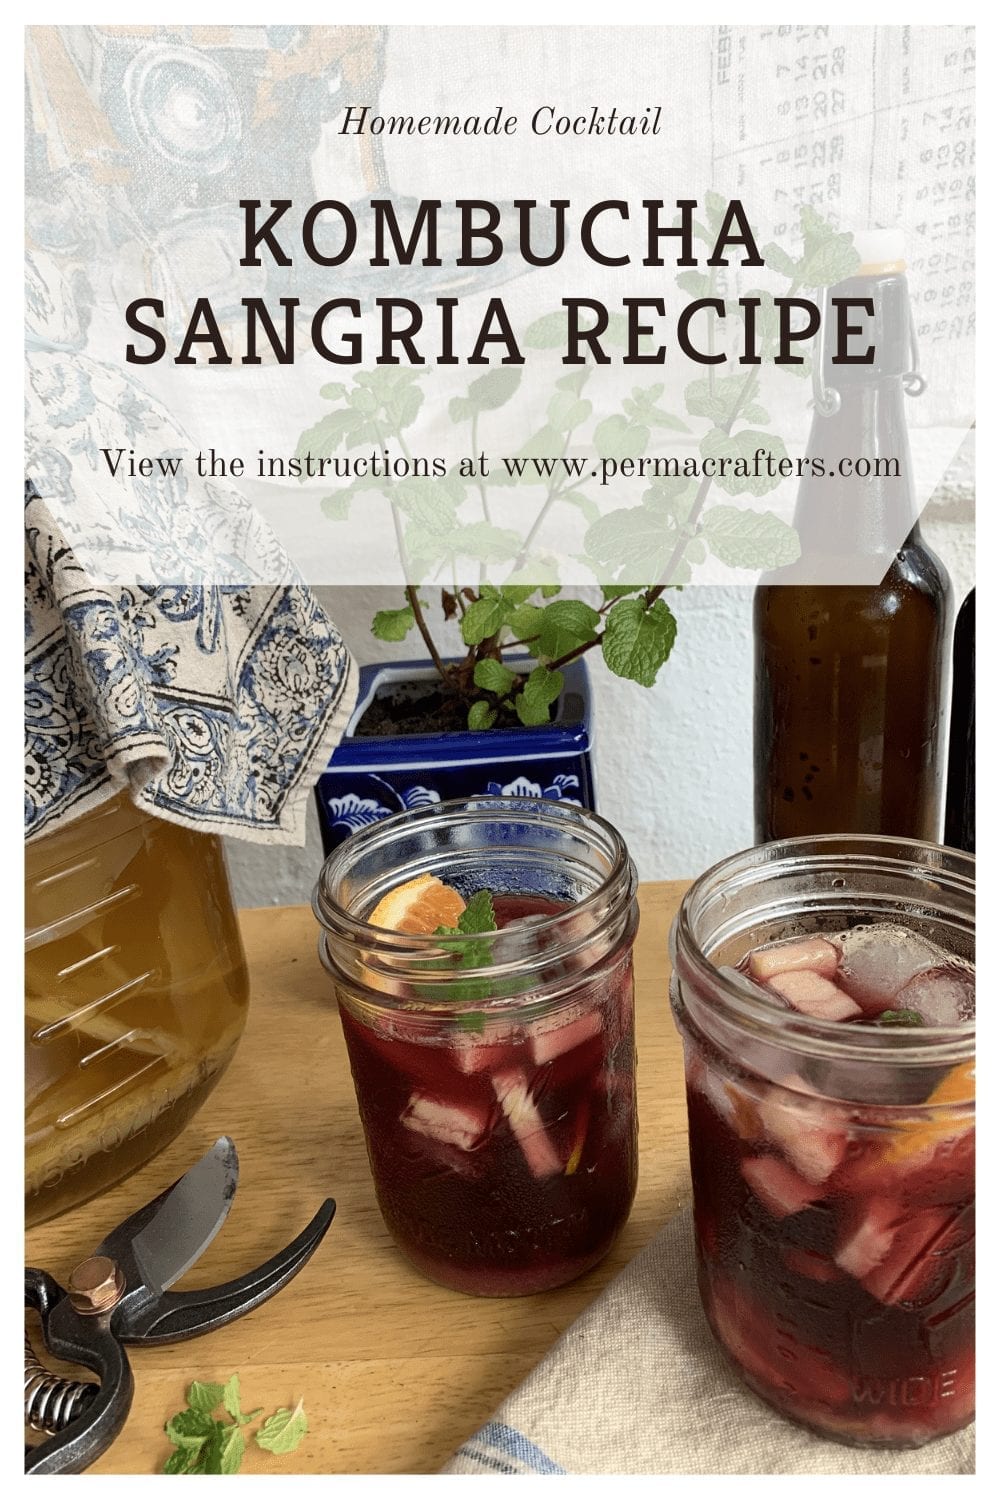 Kombucha Sangria Recipe | Homemade Cocktail Pinterest